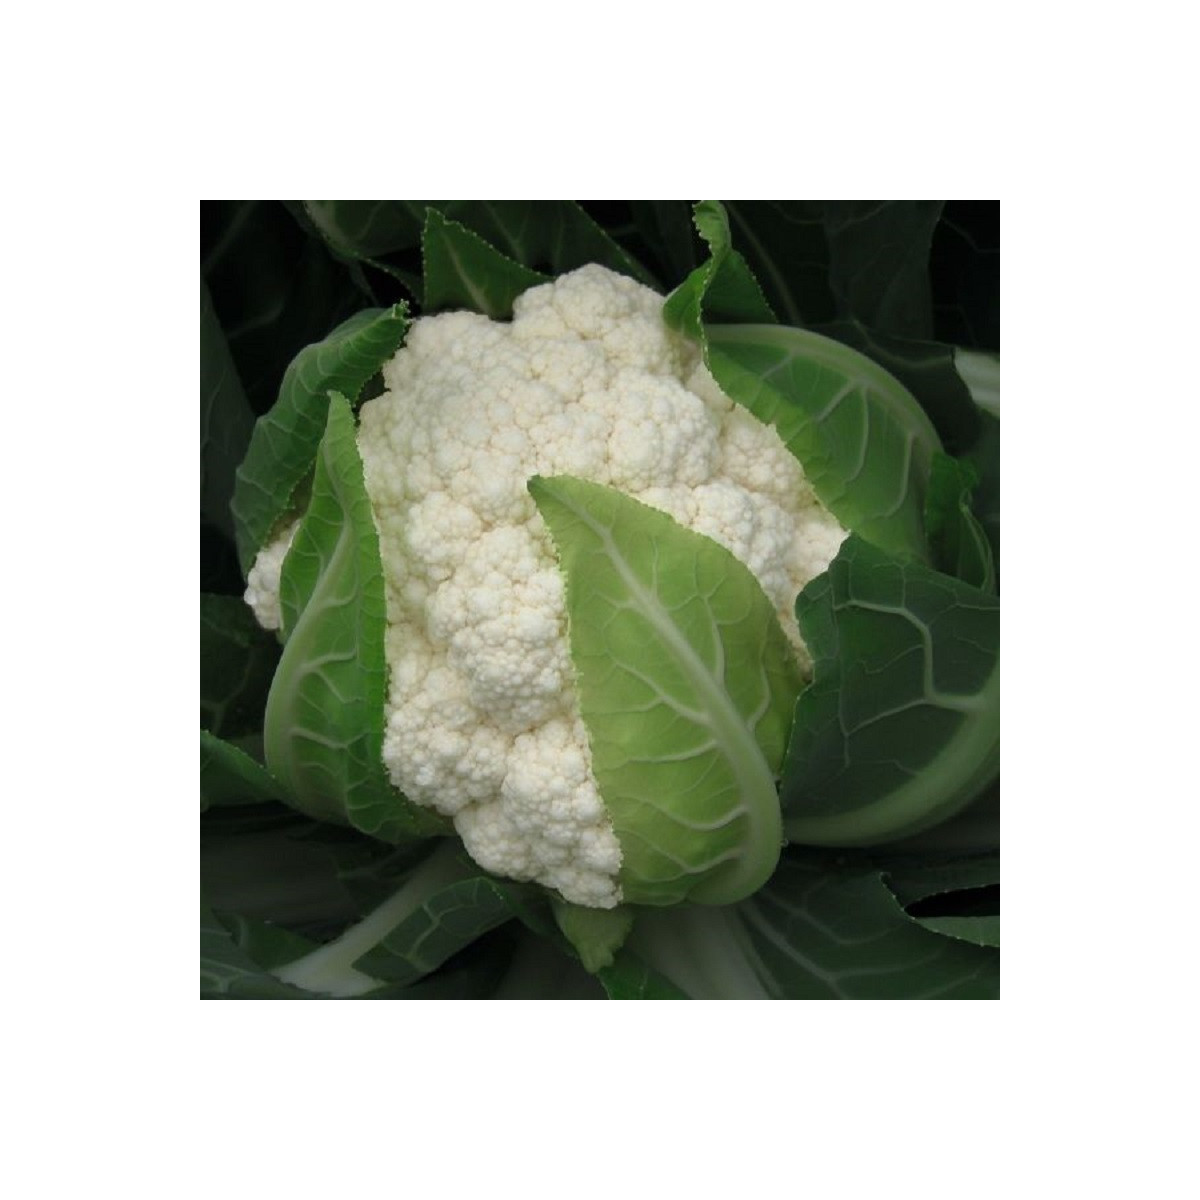 BIO Květák Flamenco F1 - Brassica oleracea - bio osivo květáku - 15 ks